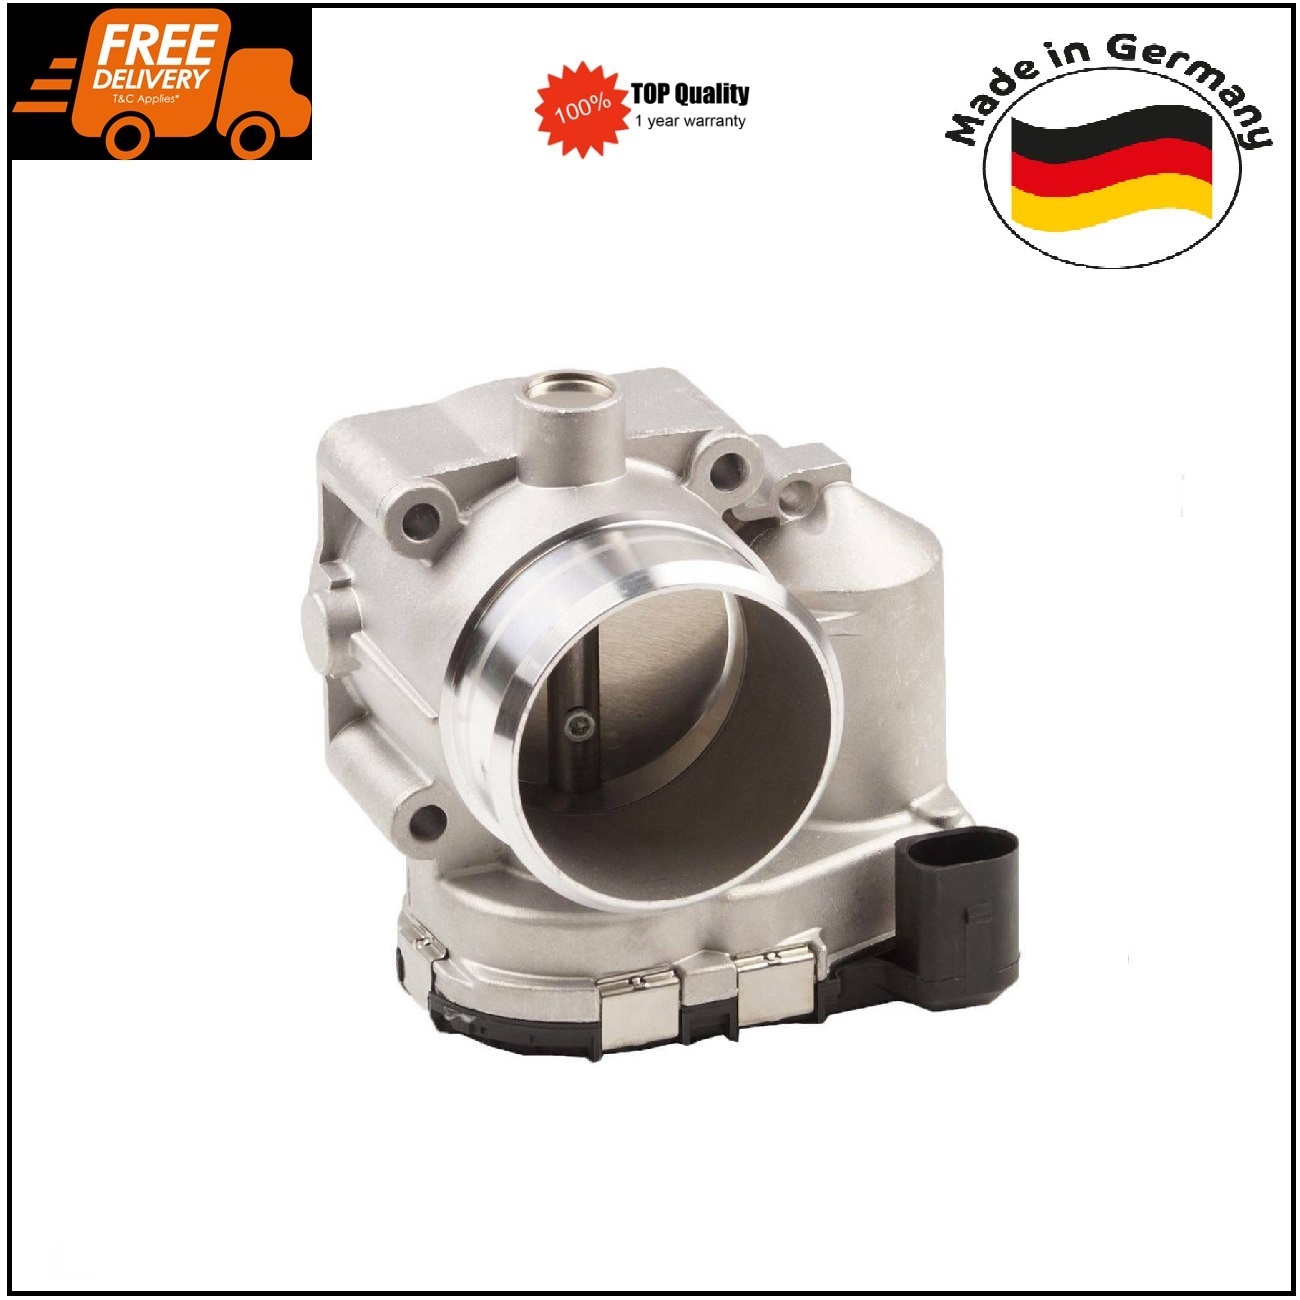 Throttle Body for Audi A4 1.8T quattro 00-08 VW Passat 1.8T 20V 96-05 06B133062M German Made